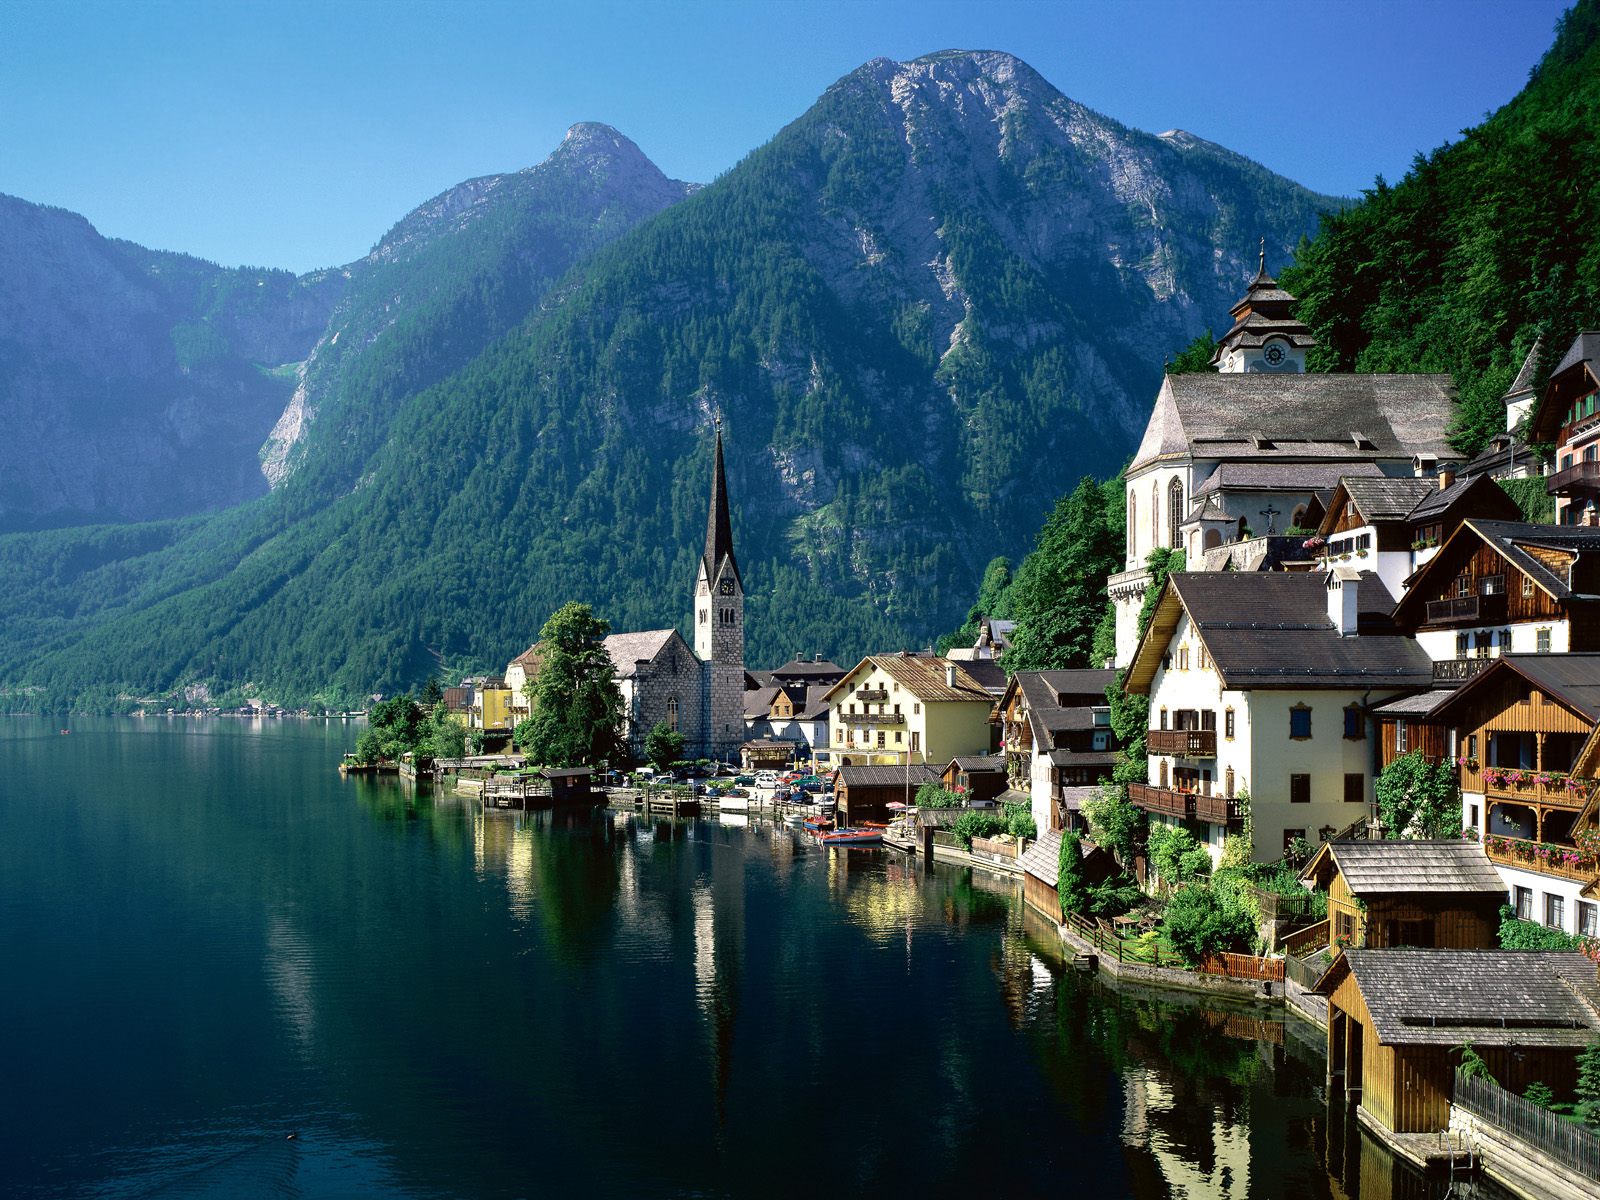 Mountain town on a serene lake